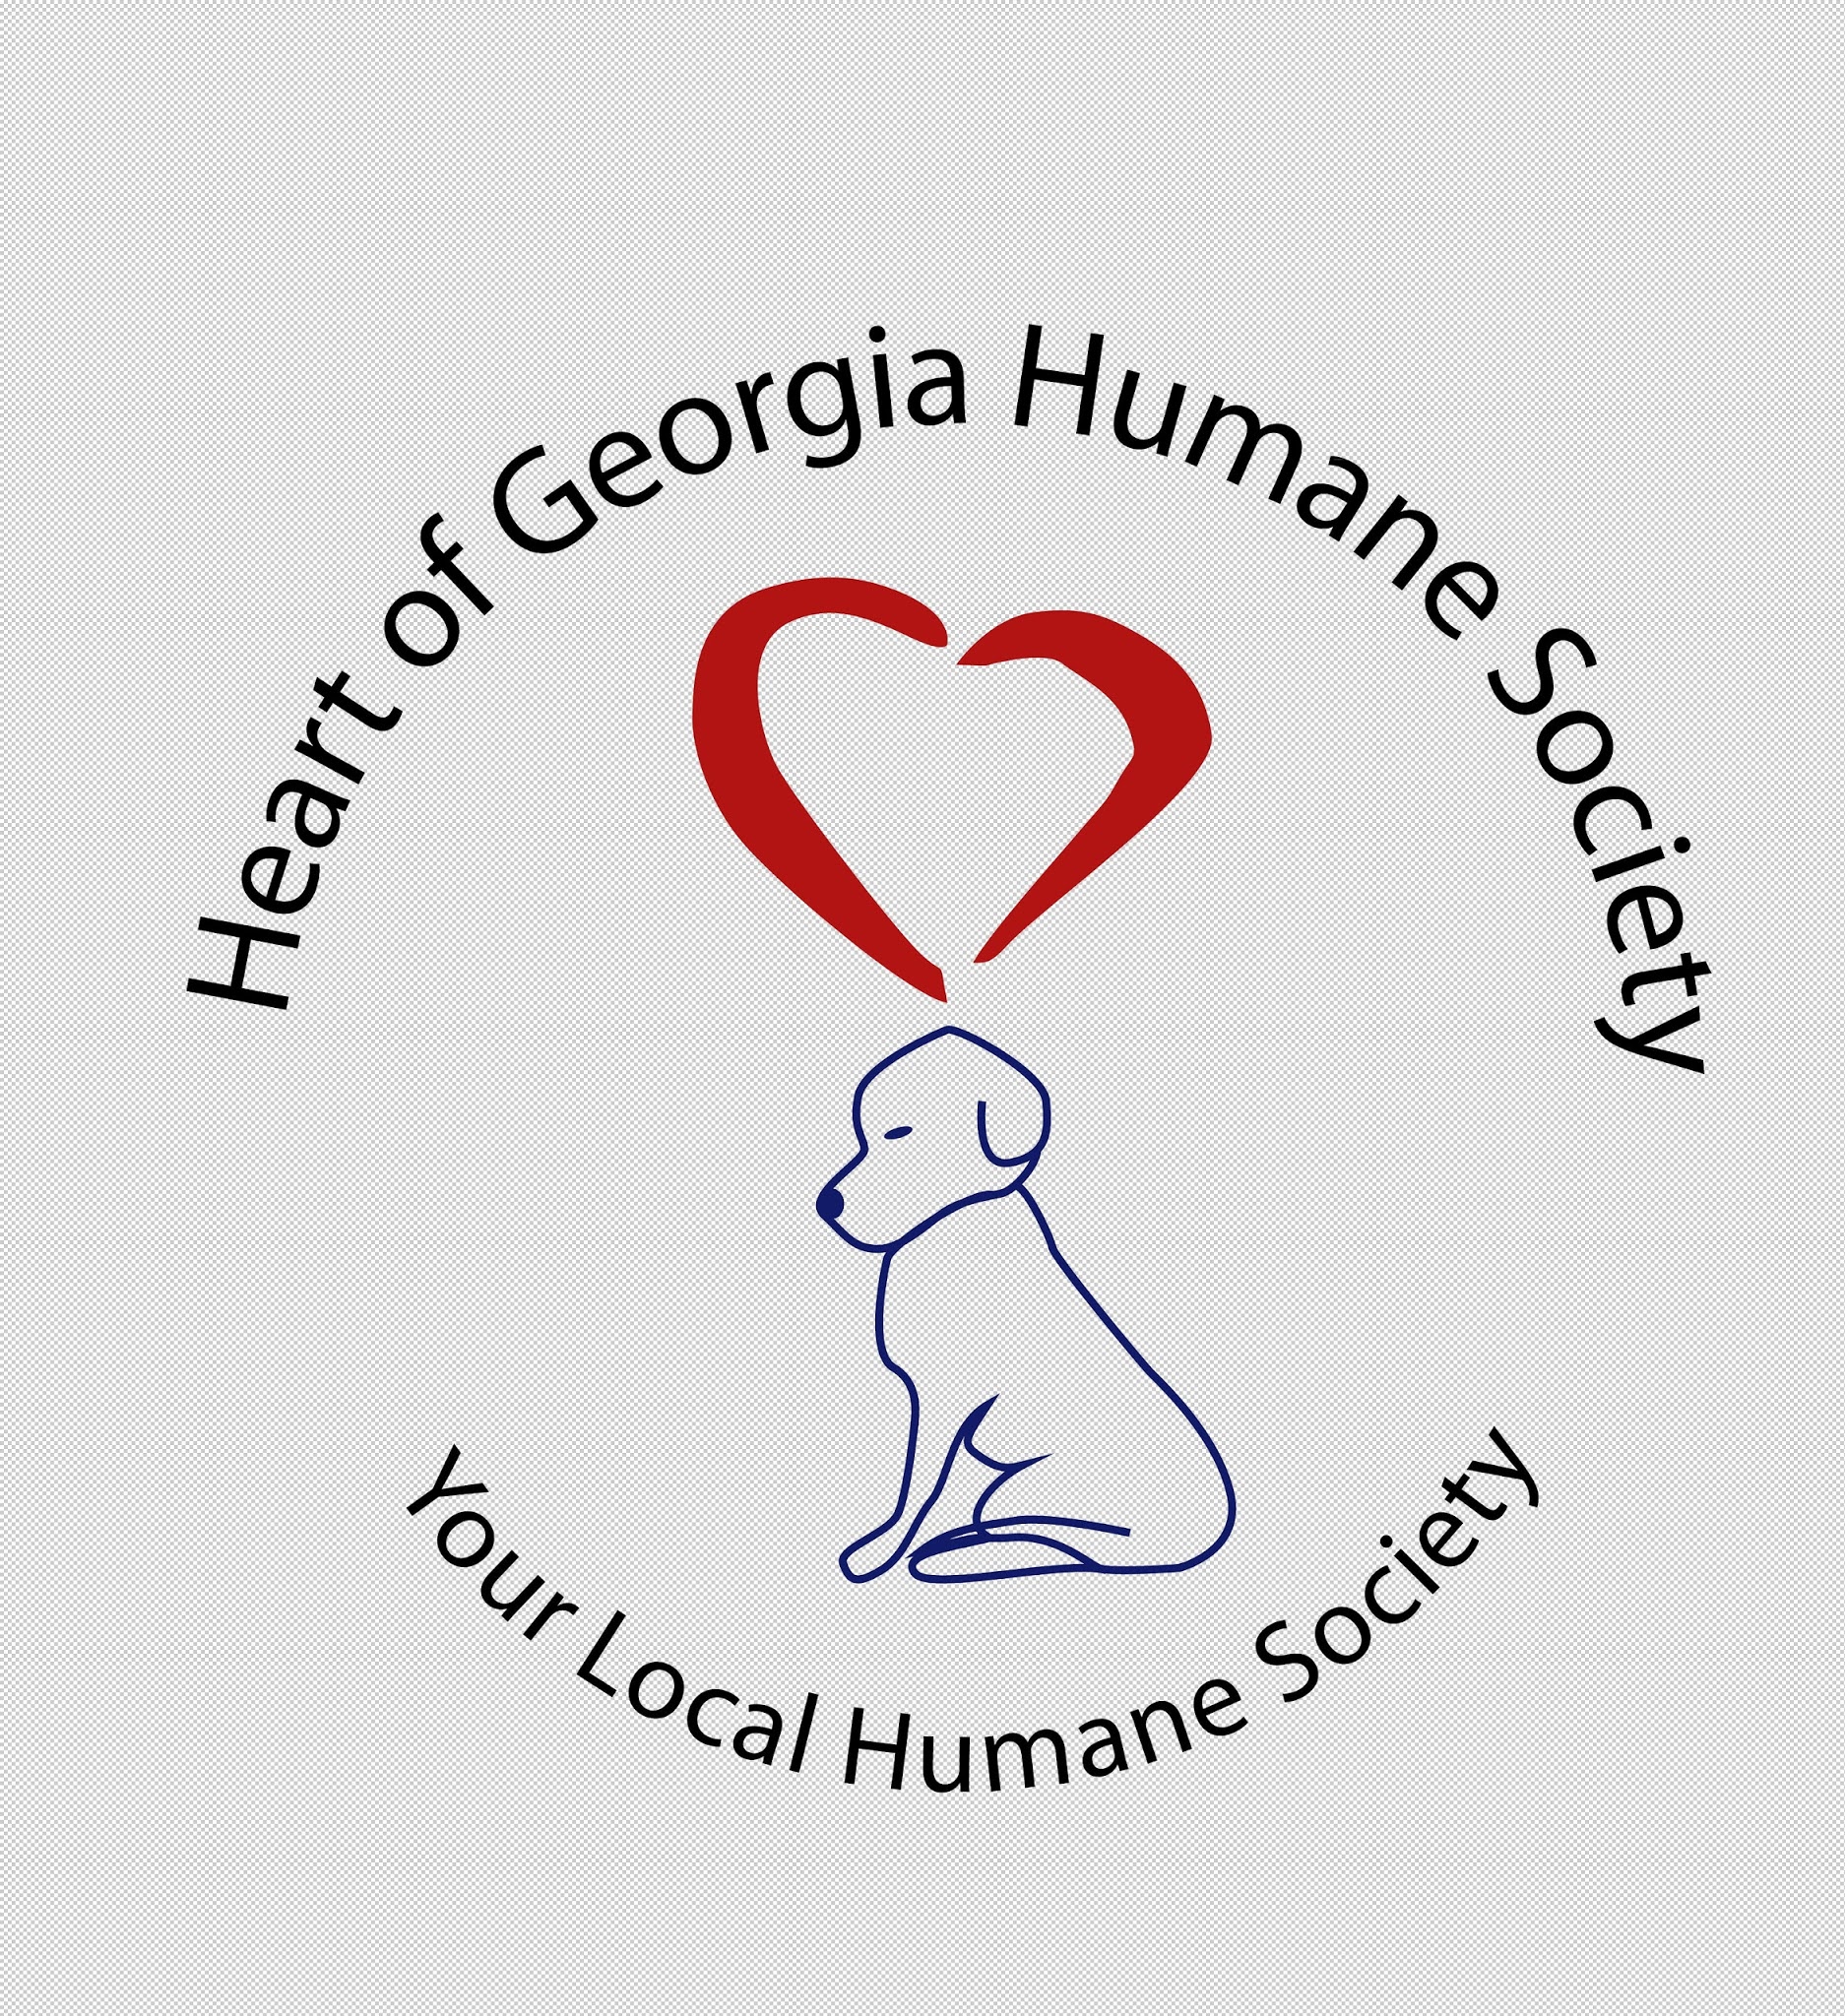 Heart of Georgia Humane Society 5K